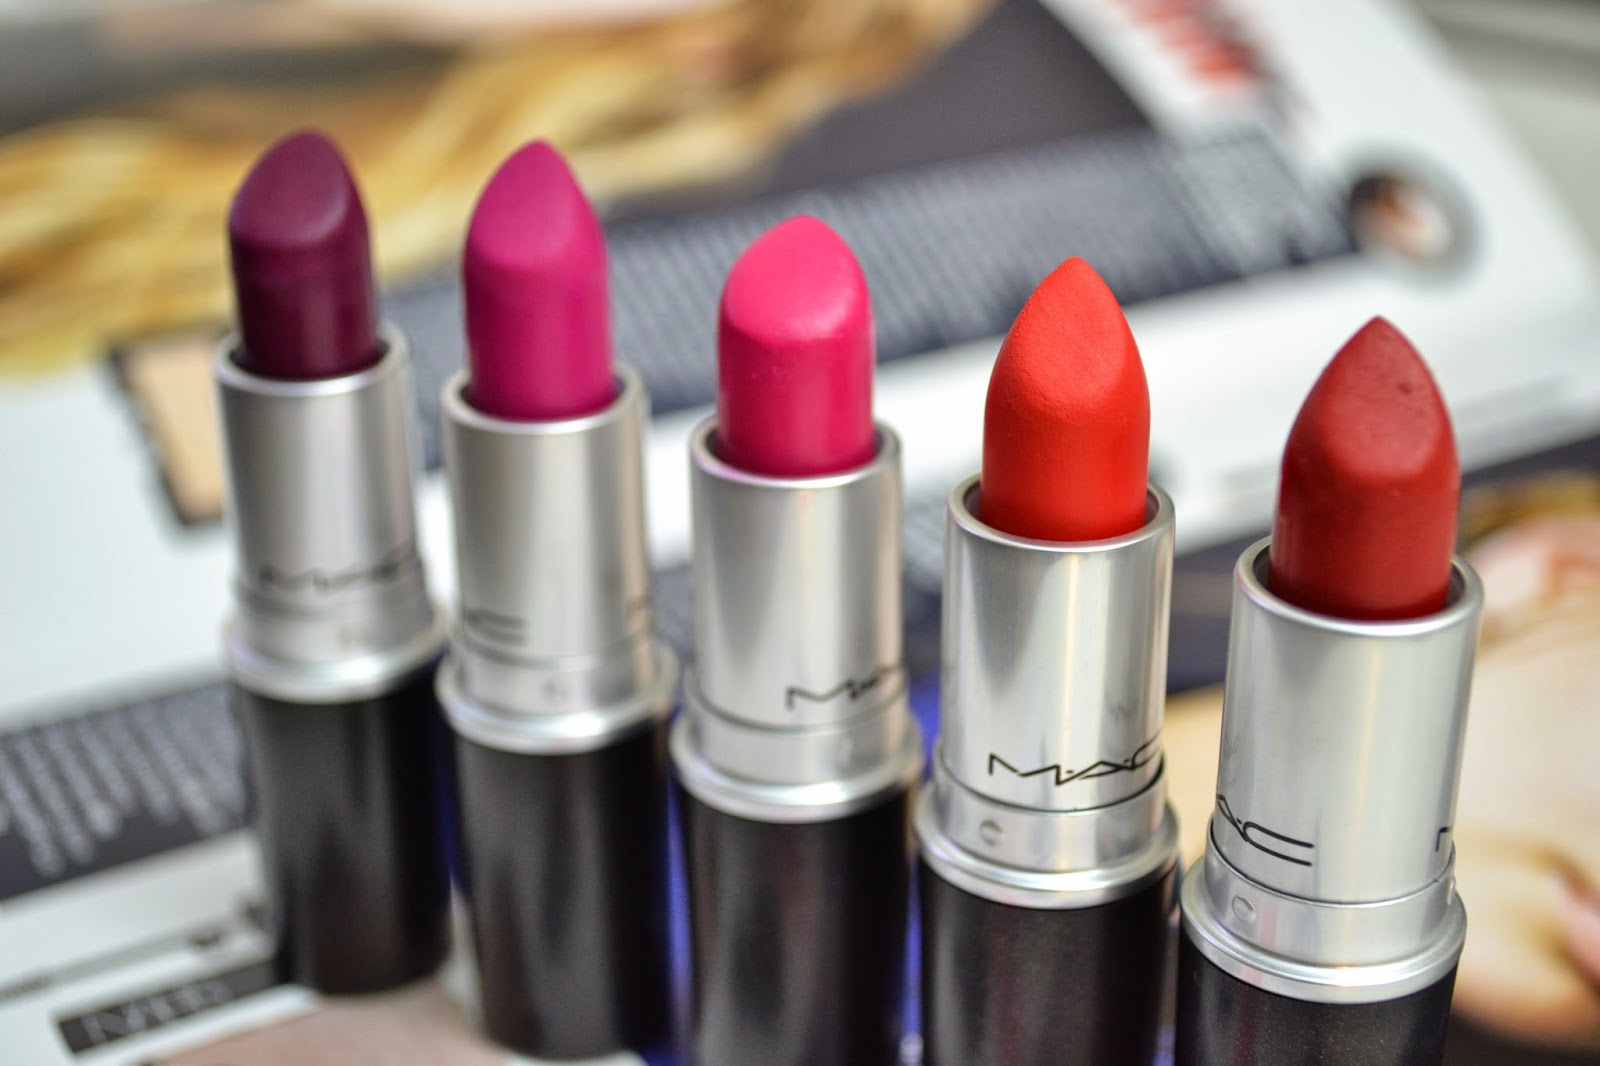 My Top 5 MAC Lipsticks.